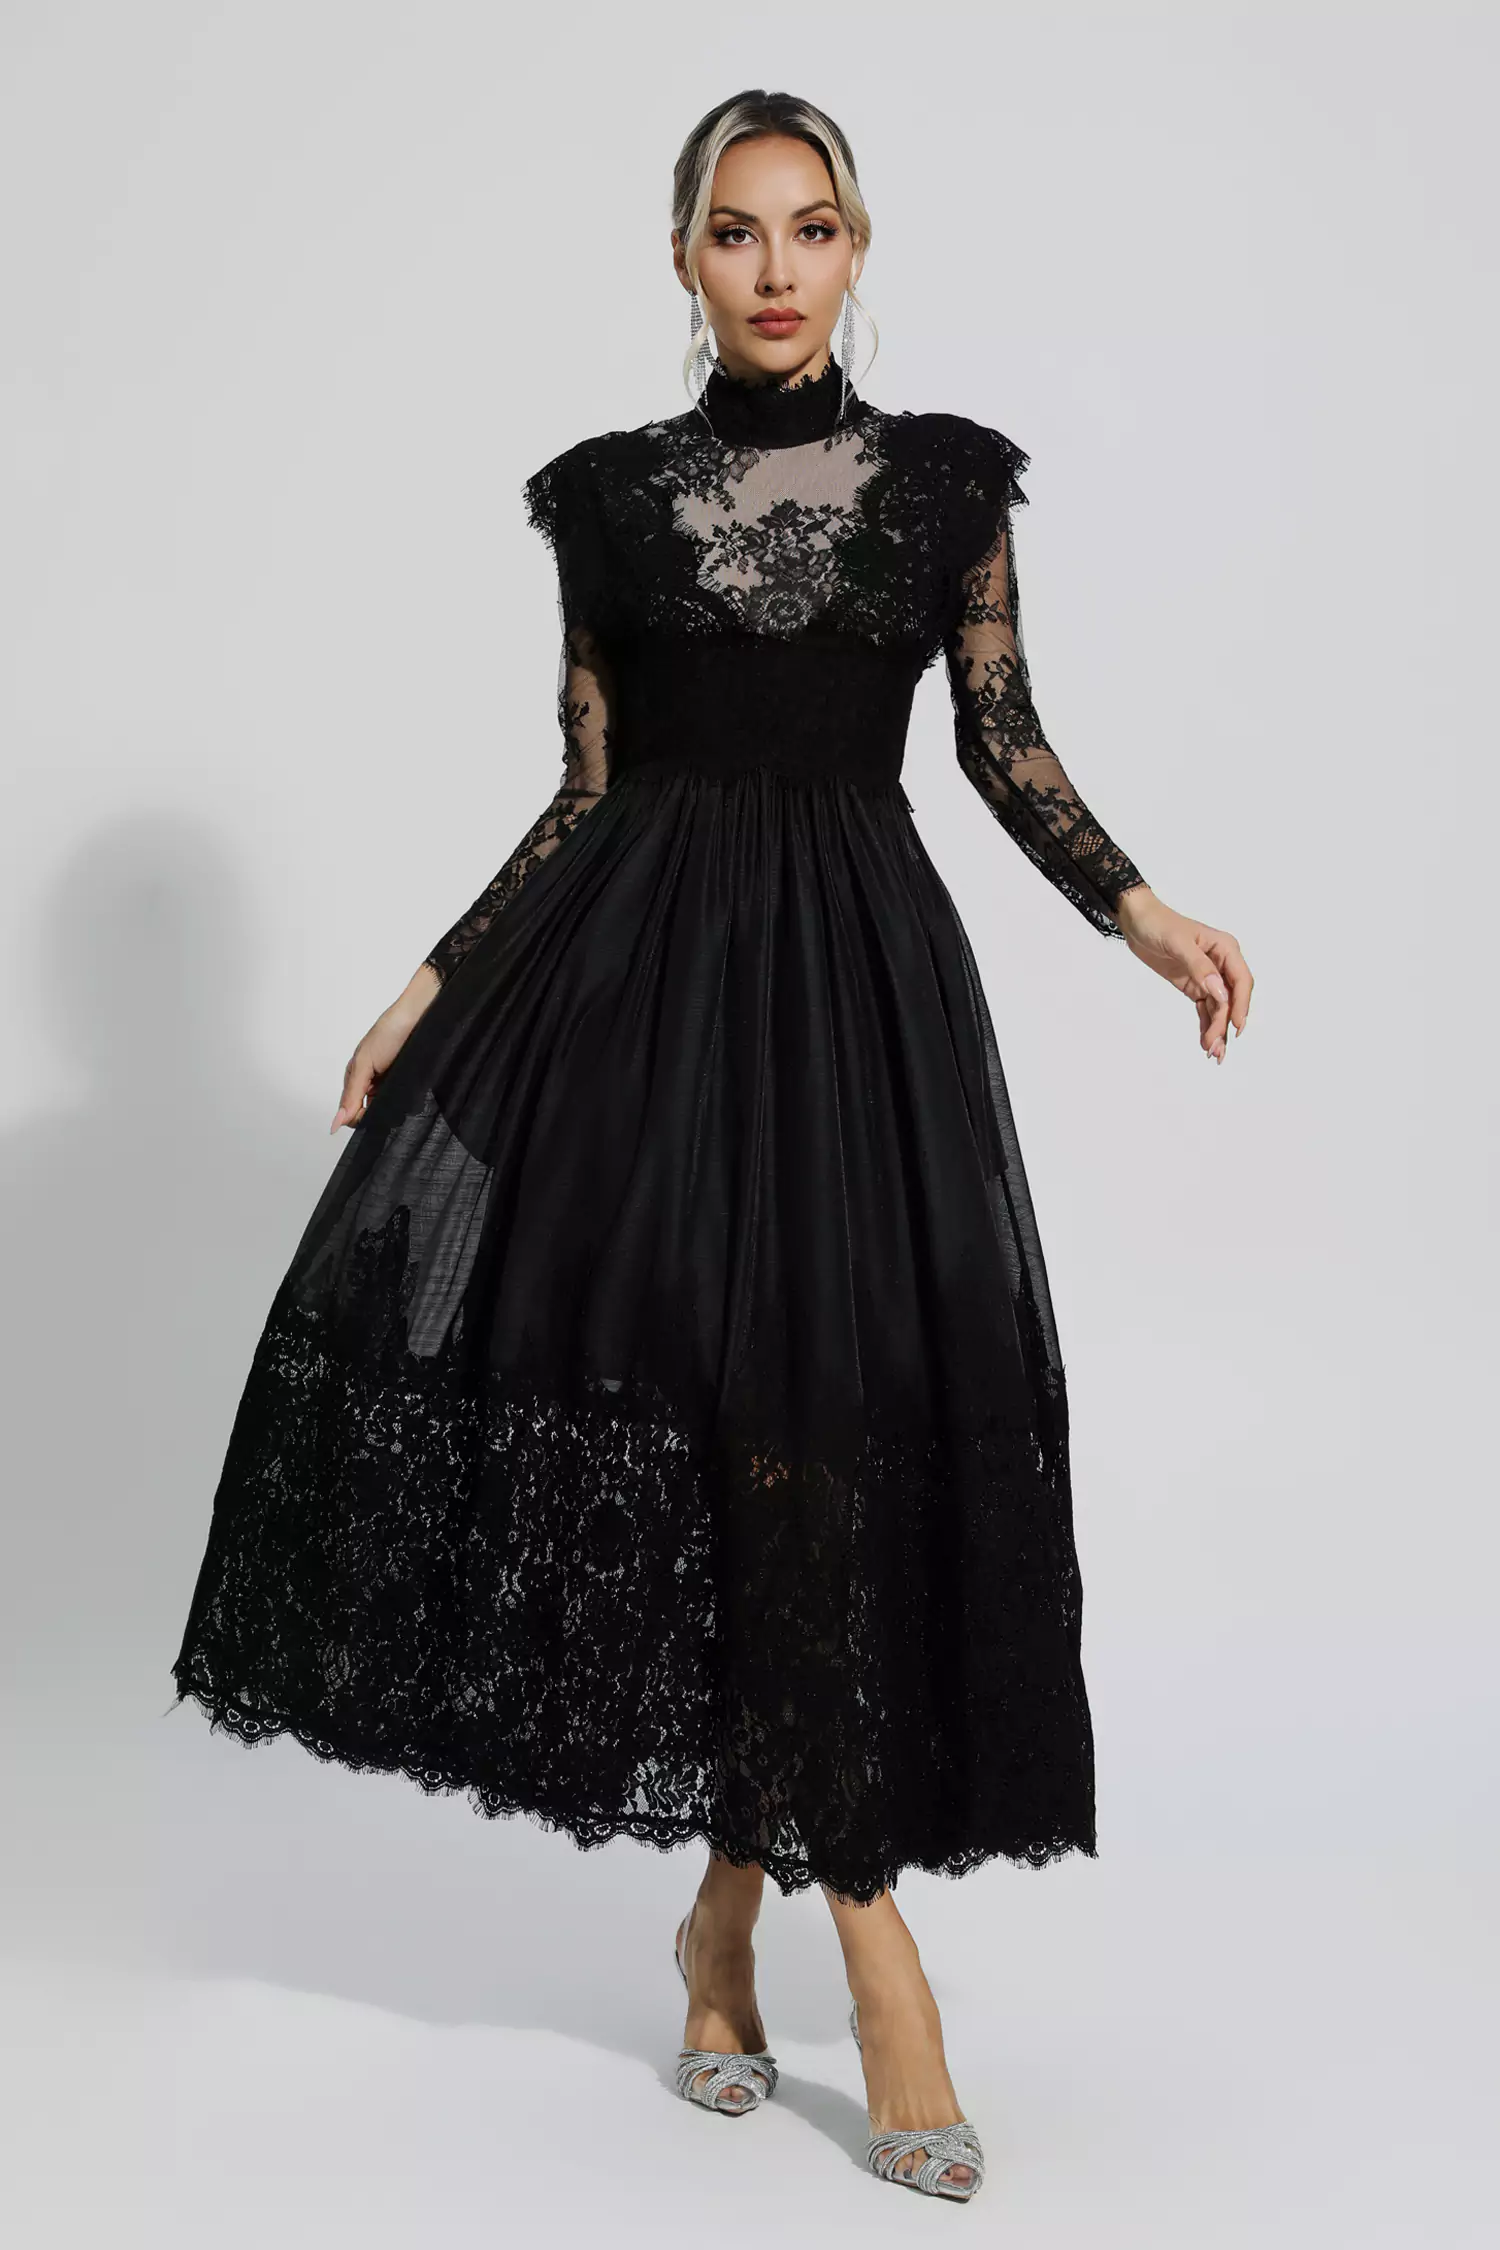 Margalo Black Lace Long Sleeve Bodycon Dress